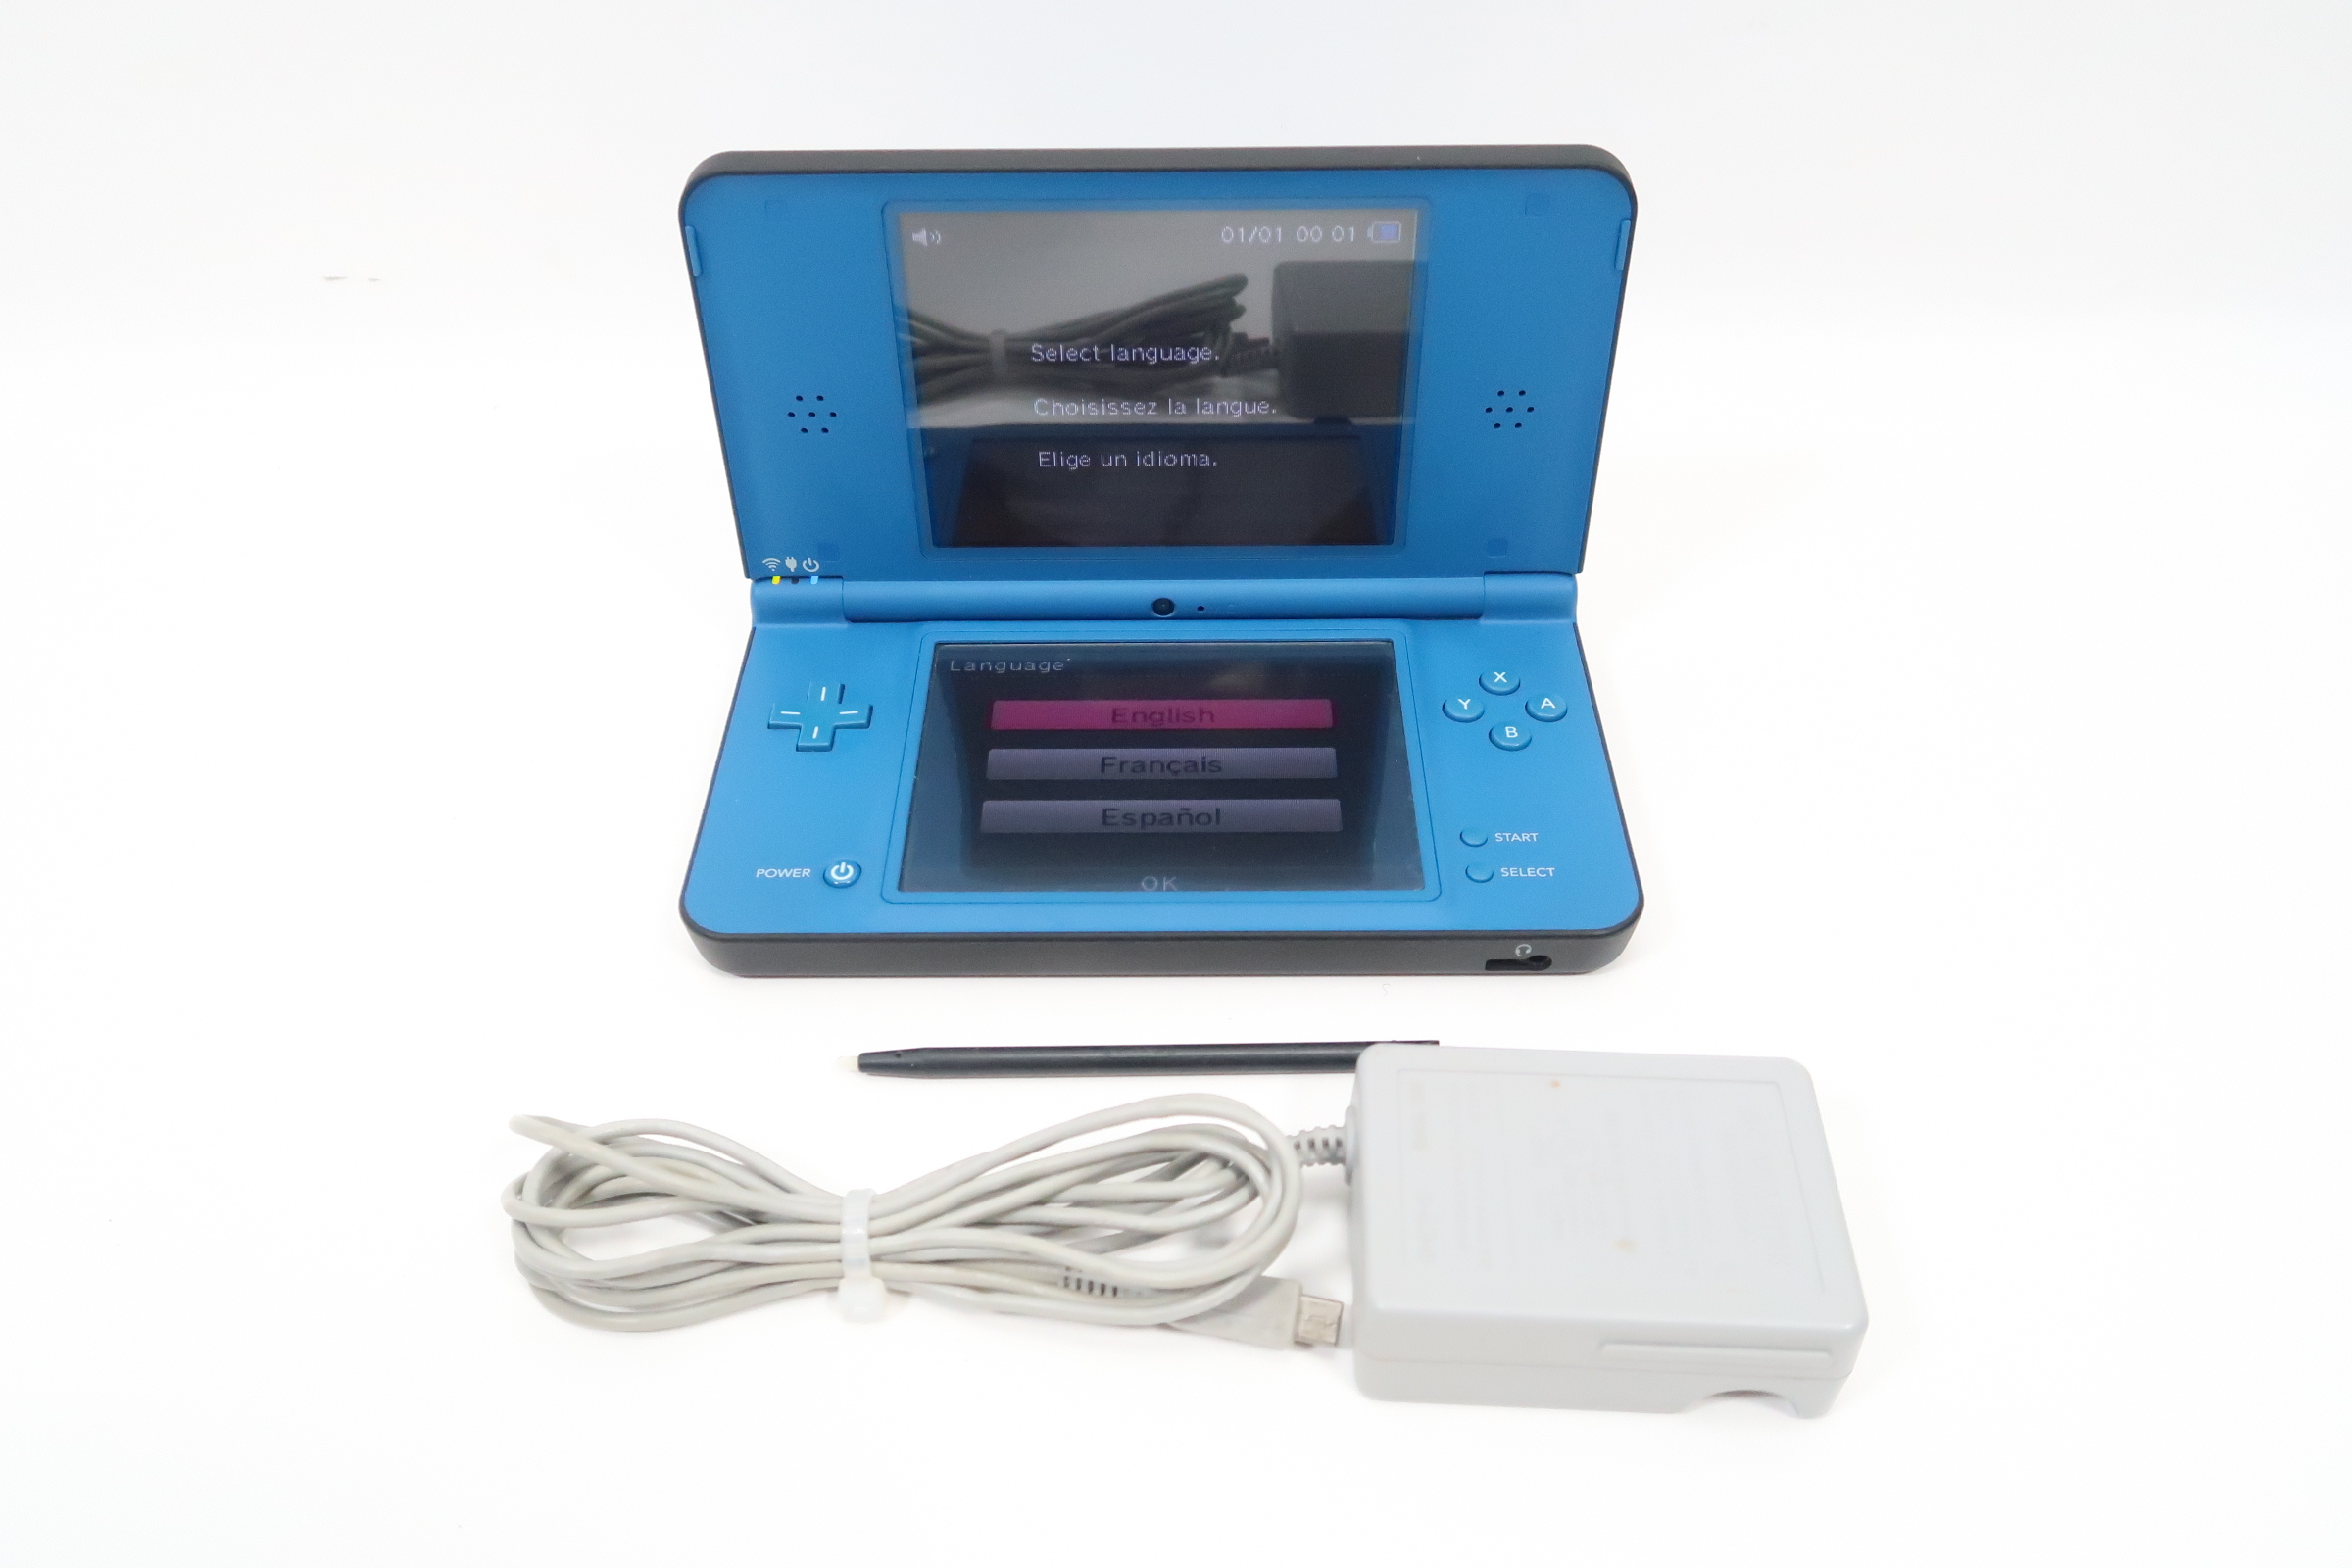 Nervesammenbrud Slutning enkemand Nintendo UTL-001 DSi XL Dual-Screen Handheld Video Game Console